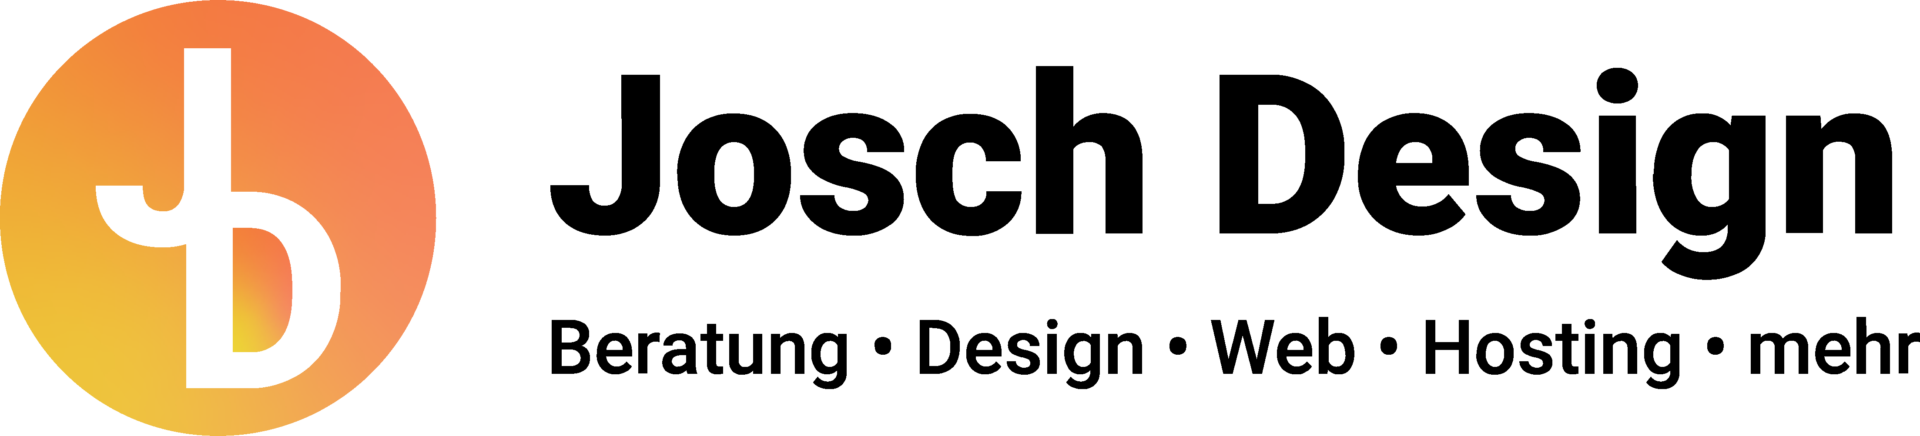 logo-joschdesign